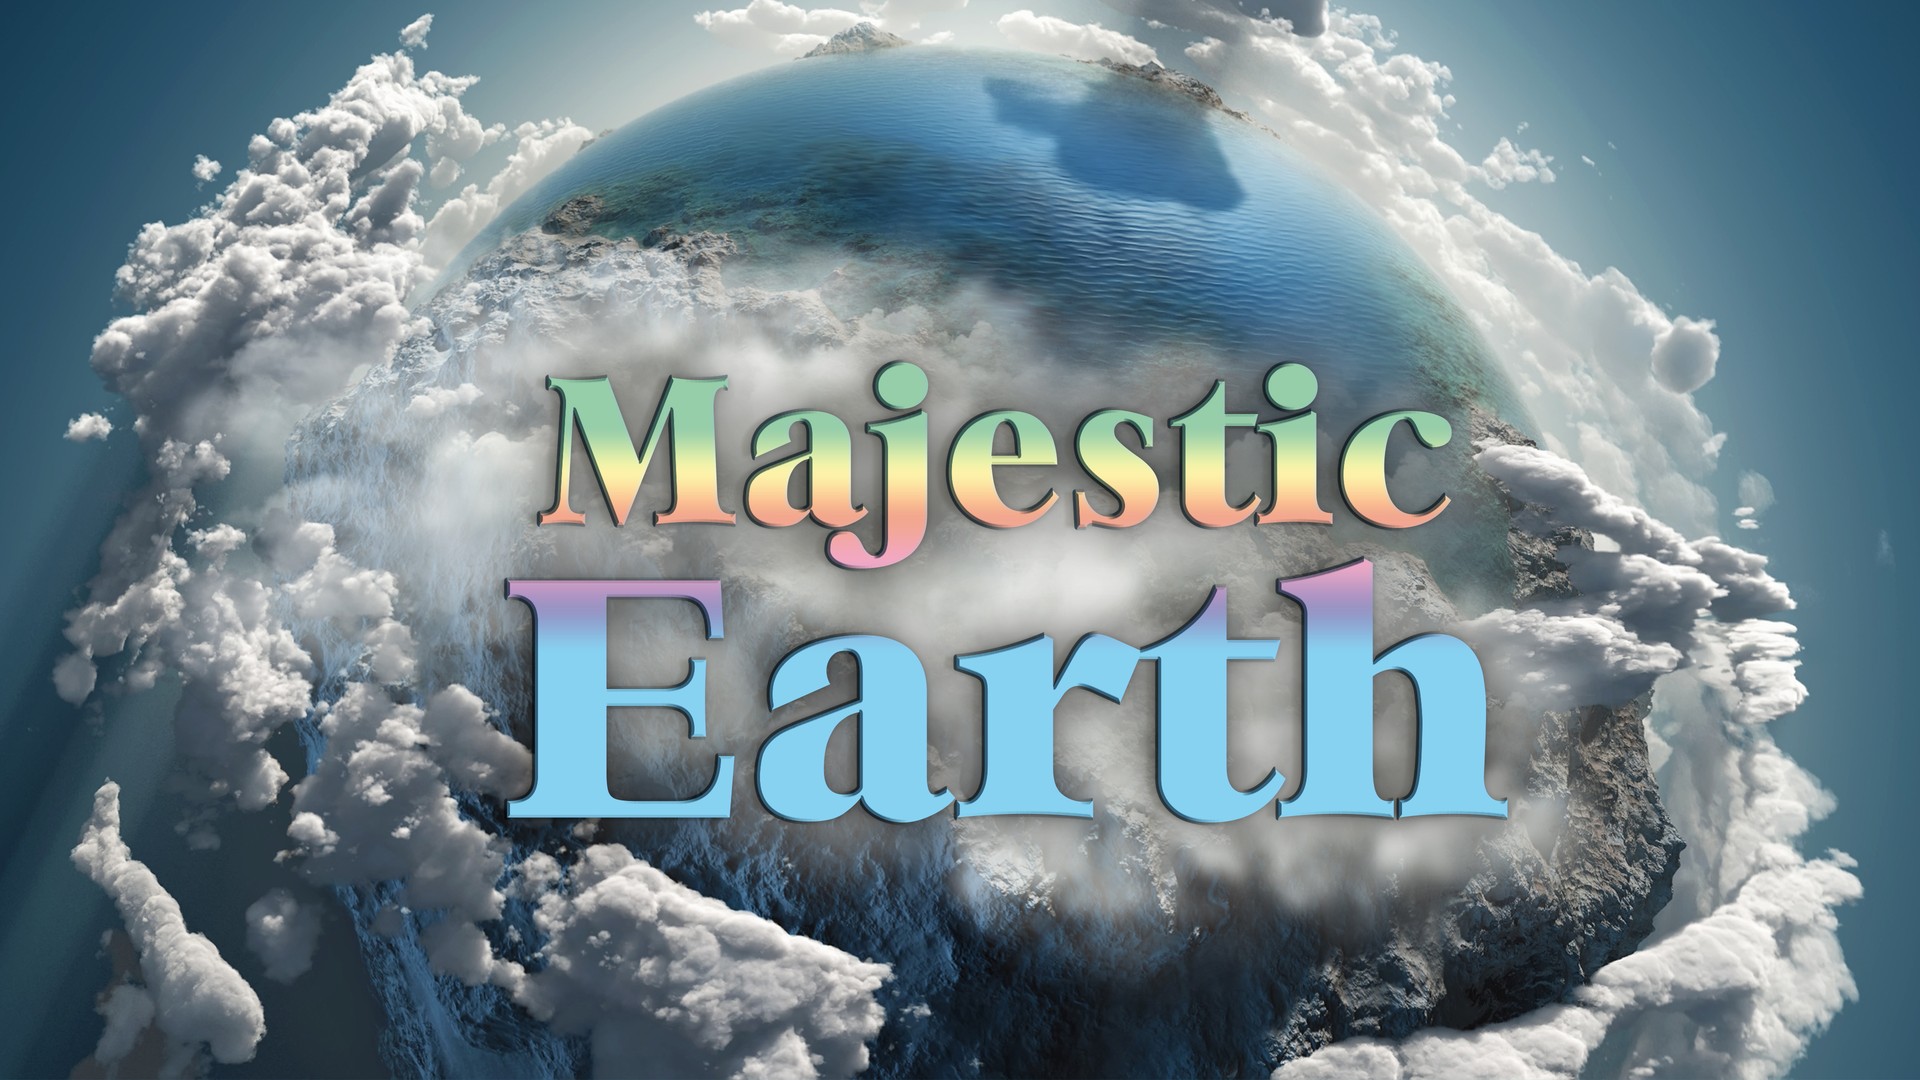 Majestic Earth